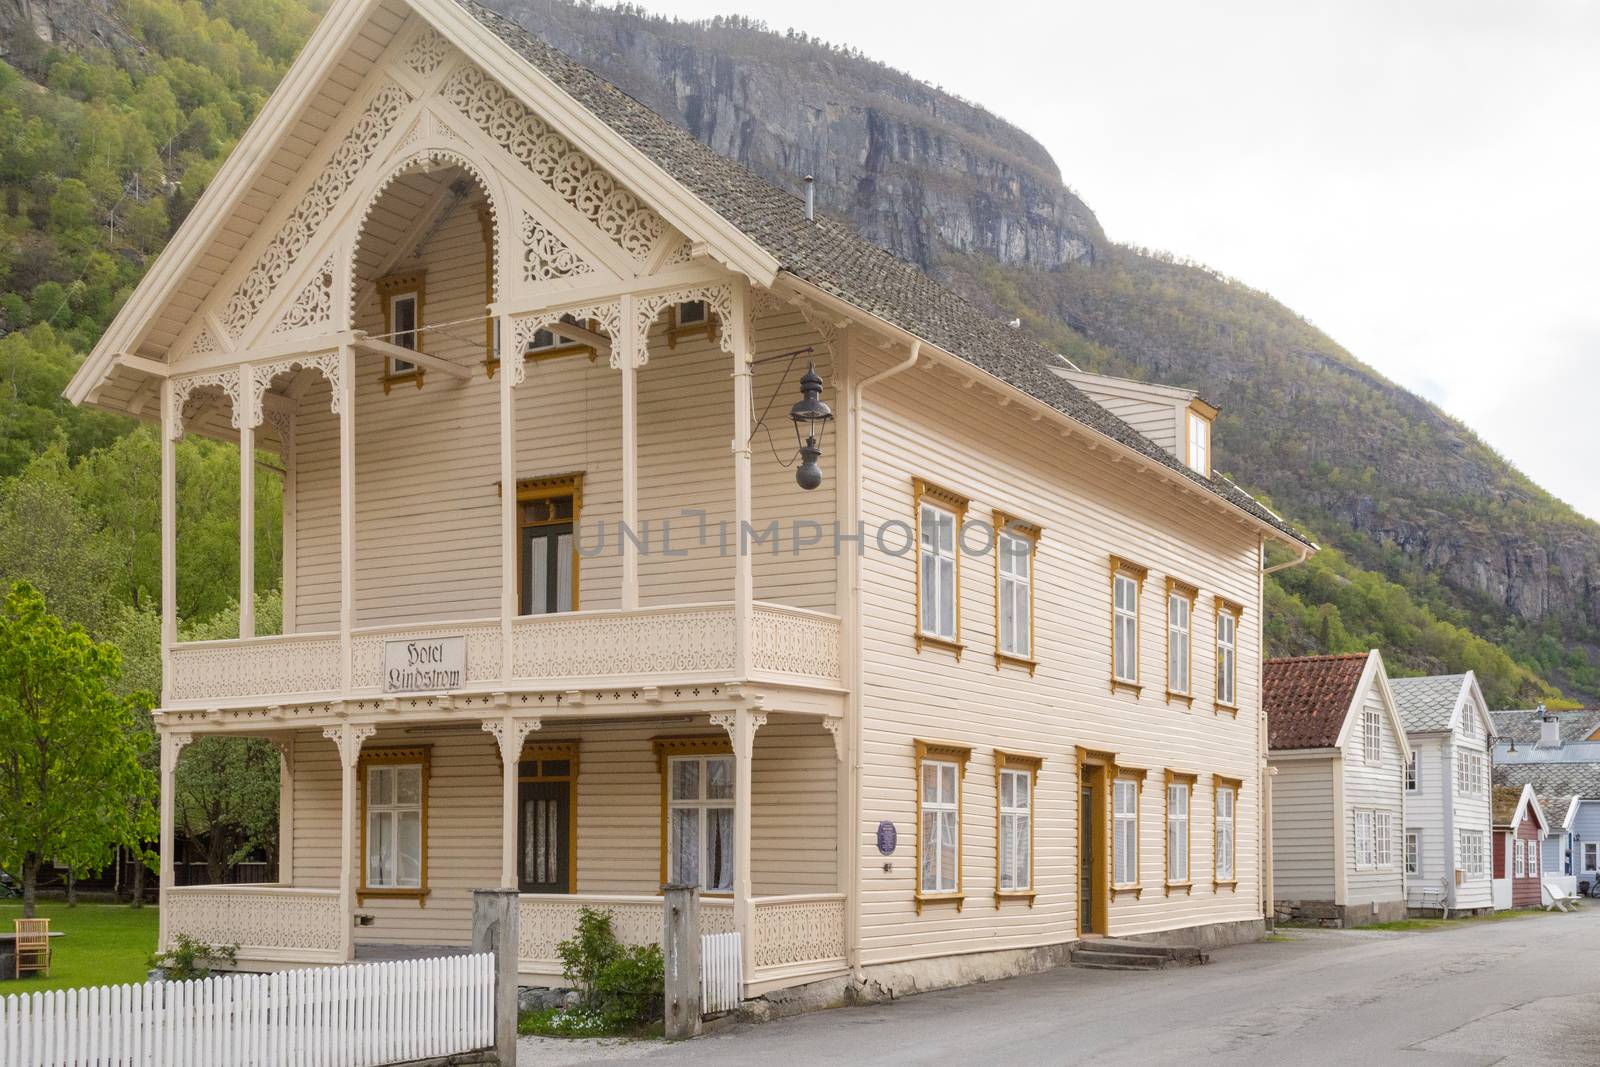 Hotel Lindstrom in Laerdal or Laerdalsoyri in Norway by kb79